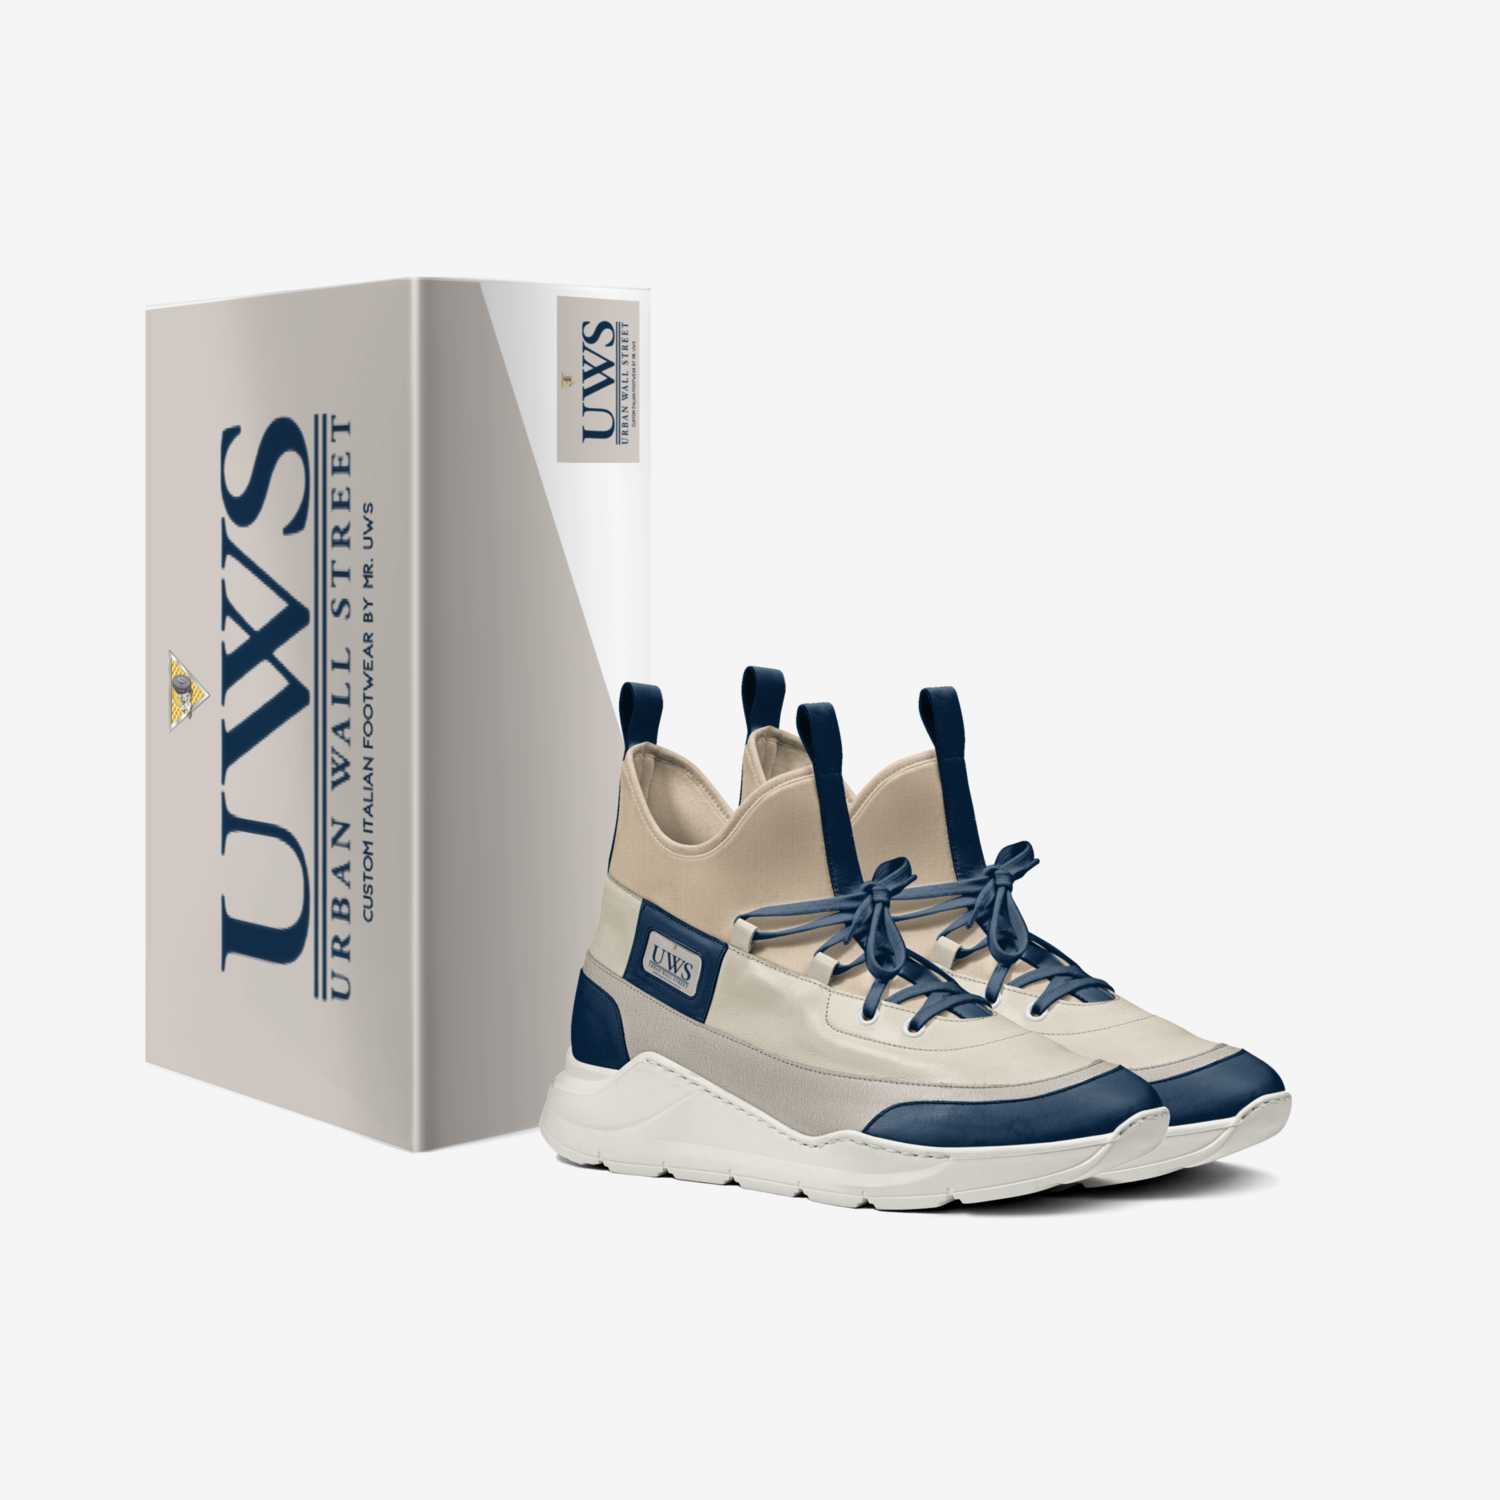 Rockawayz custom made in Italy shoes by Urbanwallstreet Earl | Box view